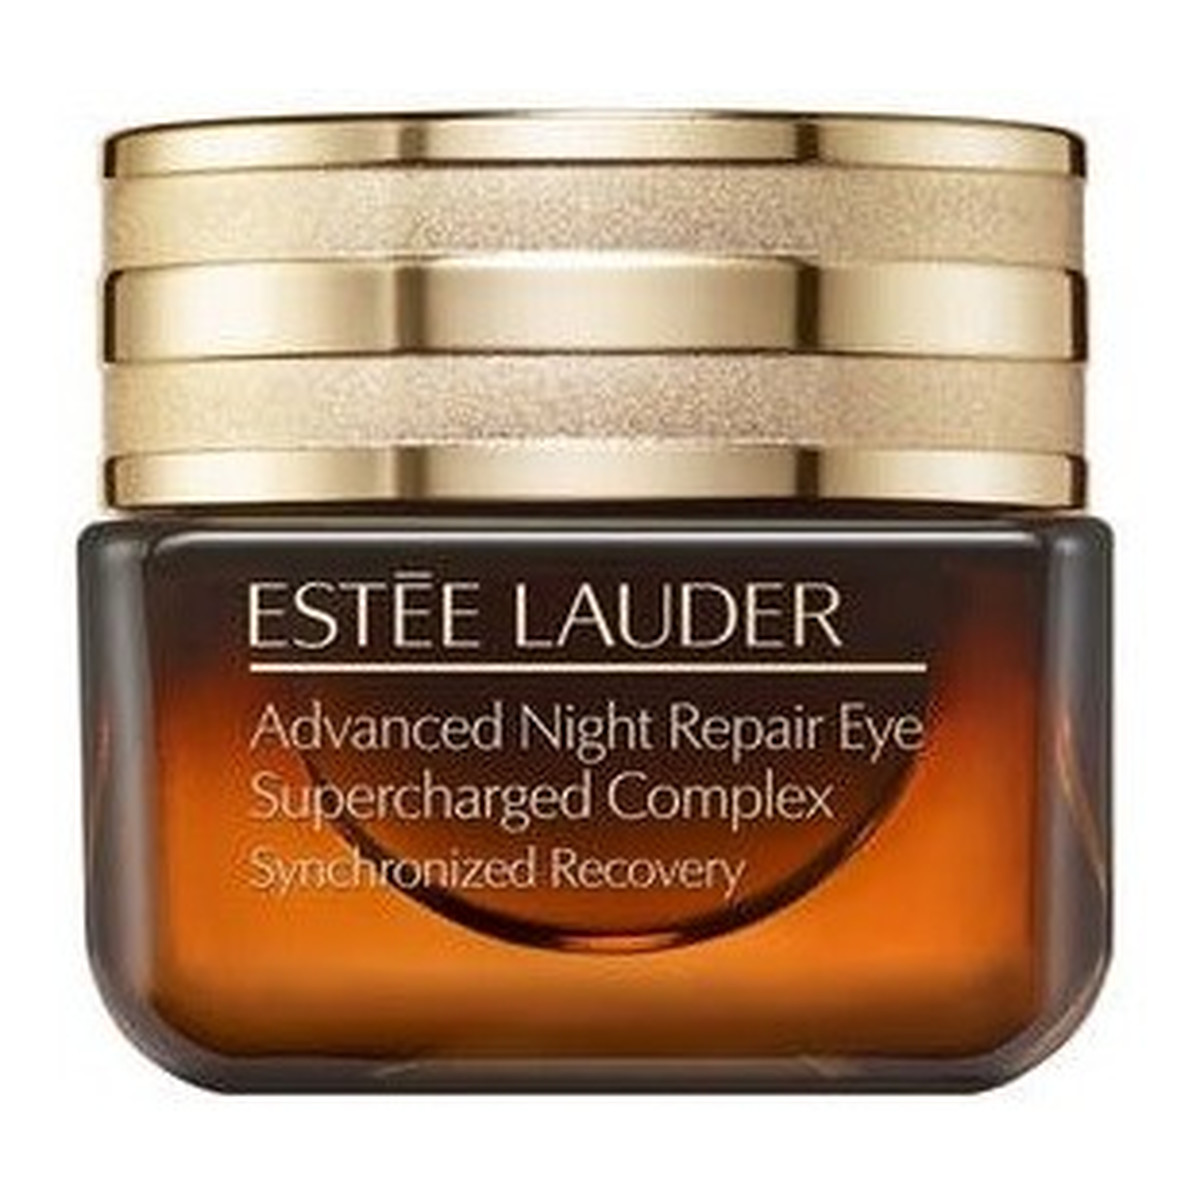 Estee Lauder Advanced Night Repair Eye Supercharged Complex żelowy krem pod oczy 15ml